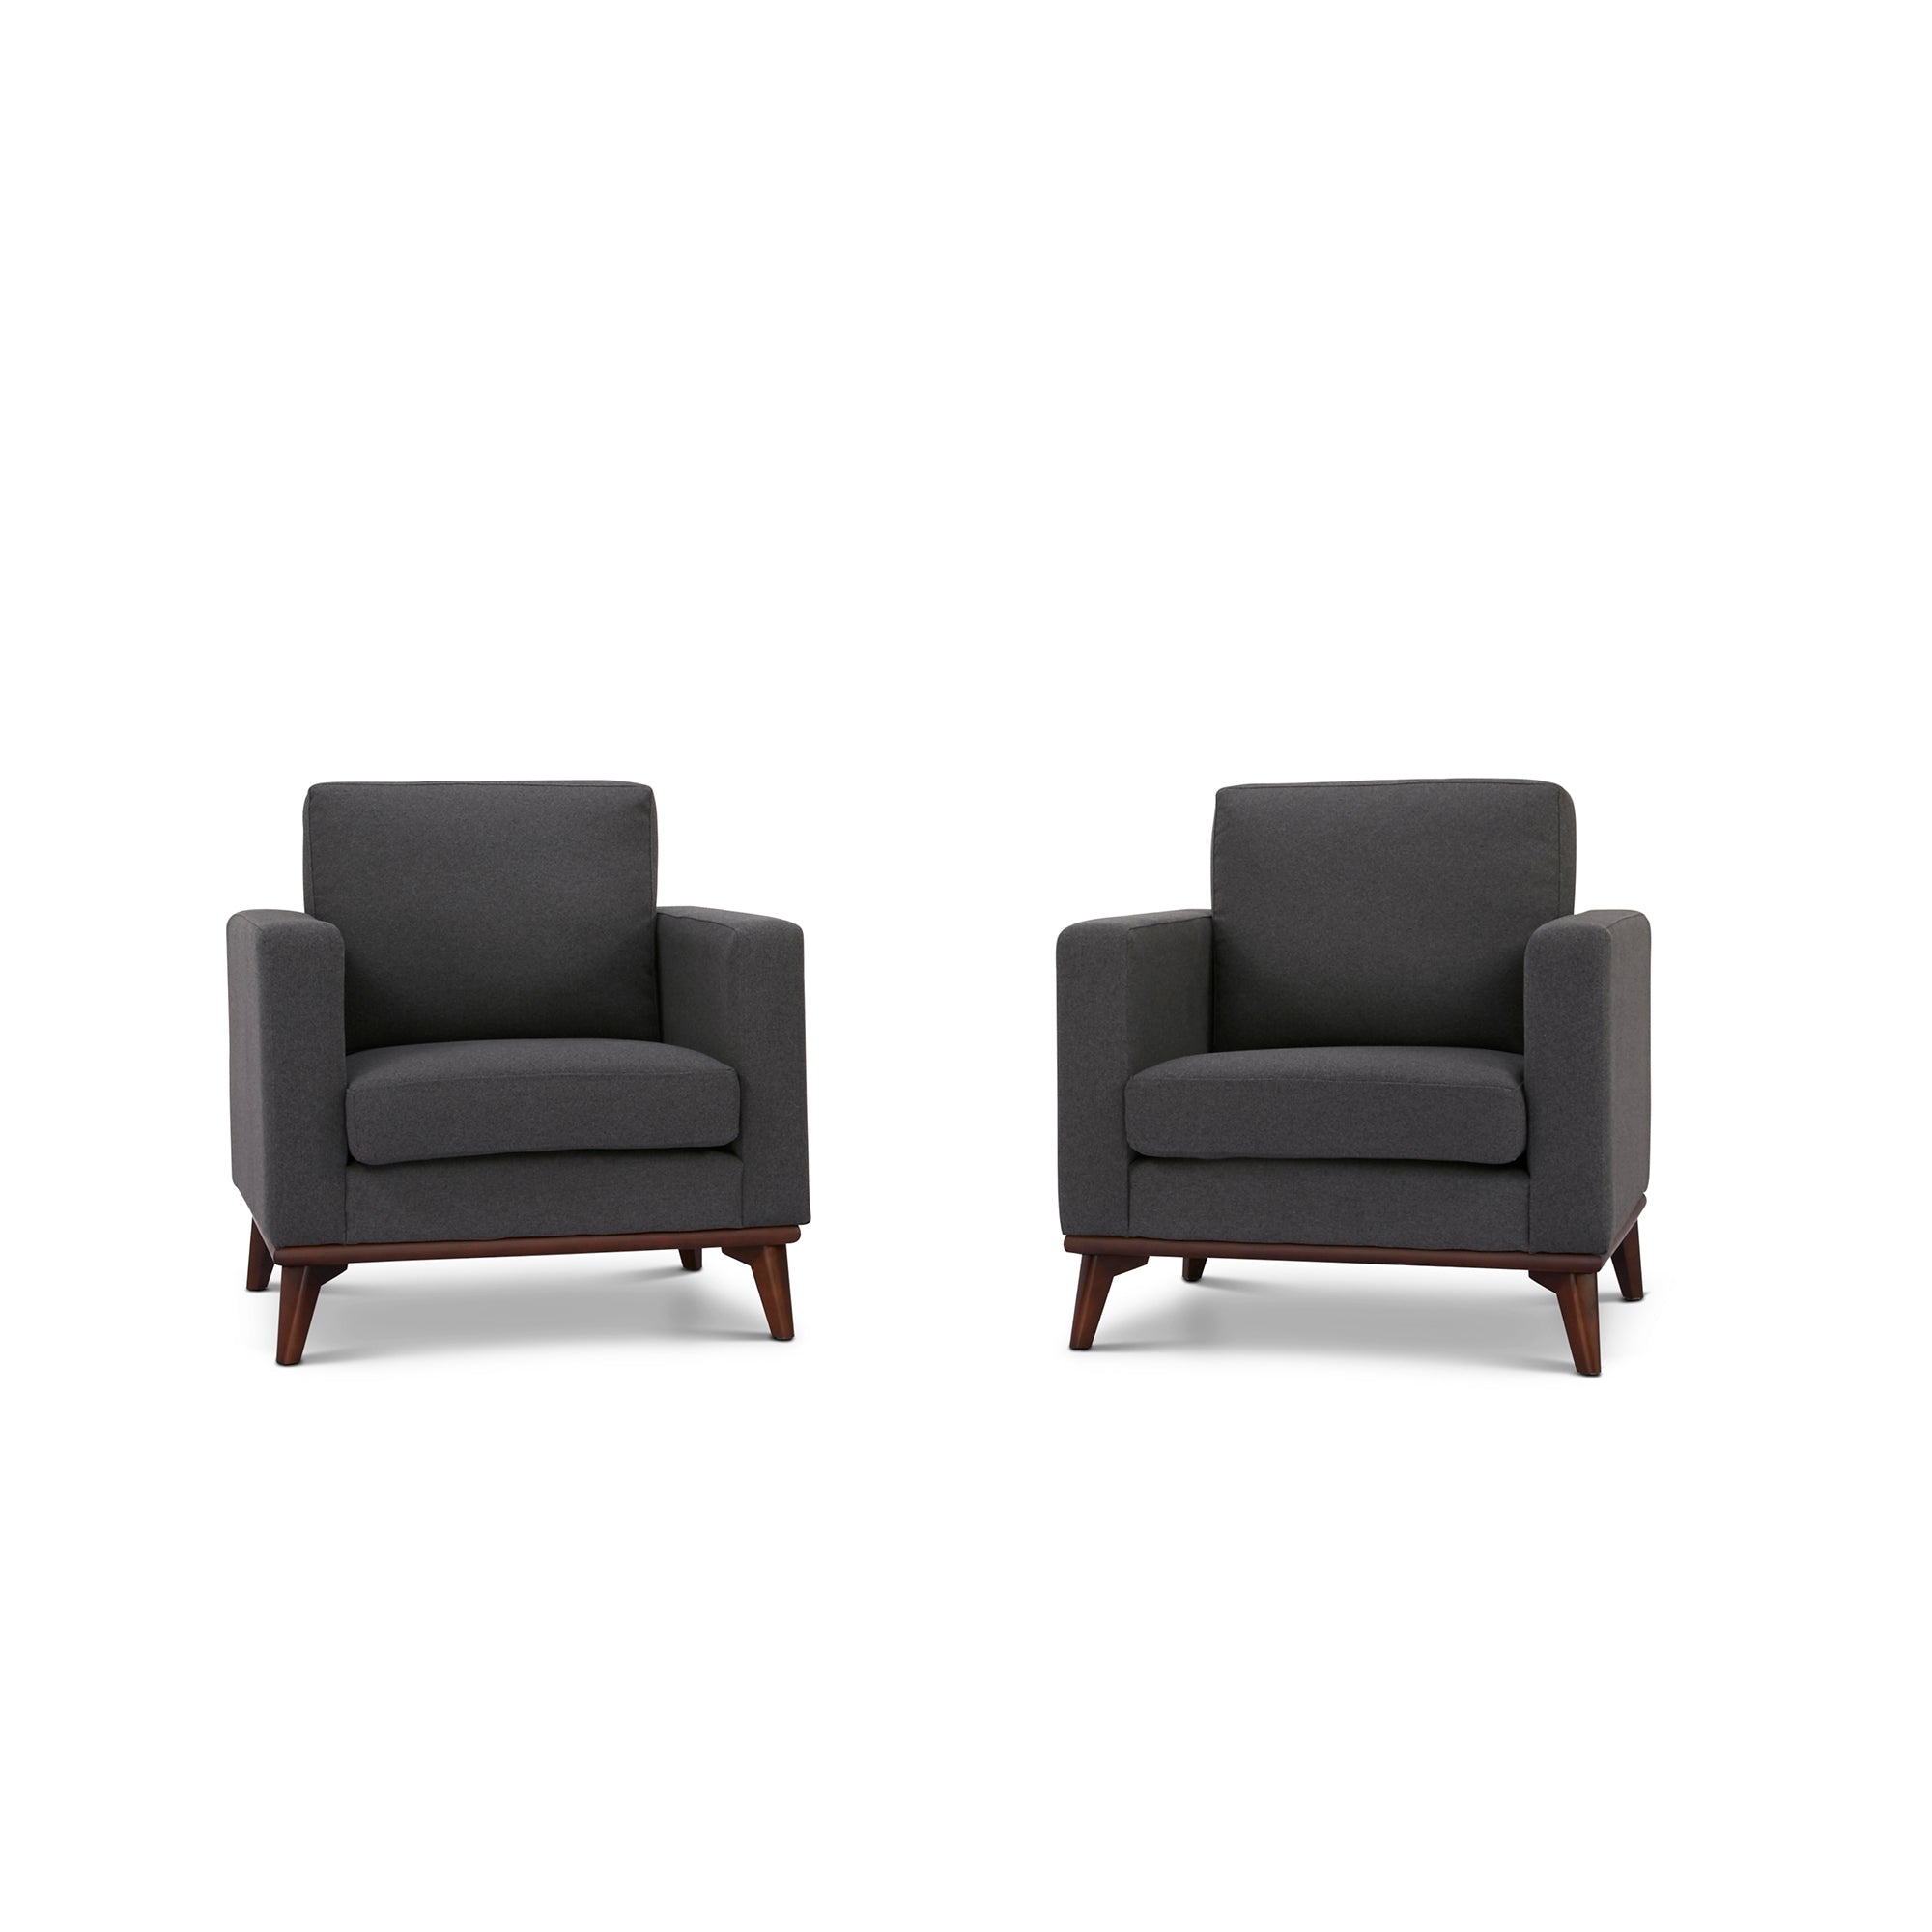 Archer Accent Chair - Set of 2